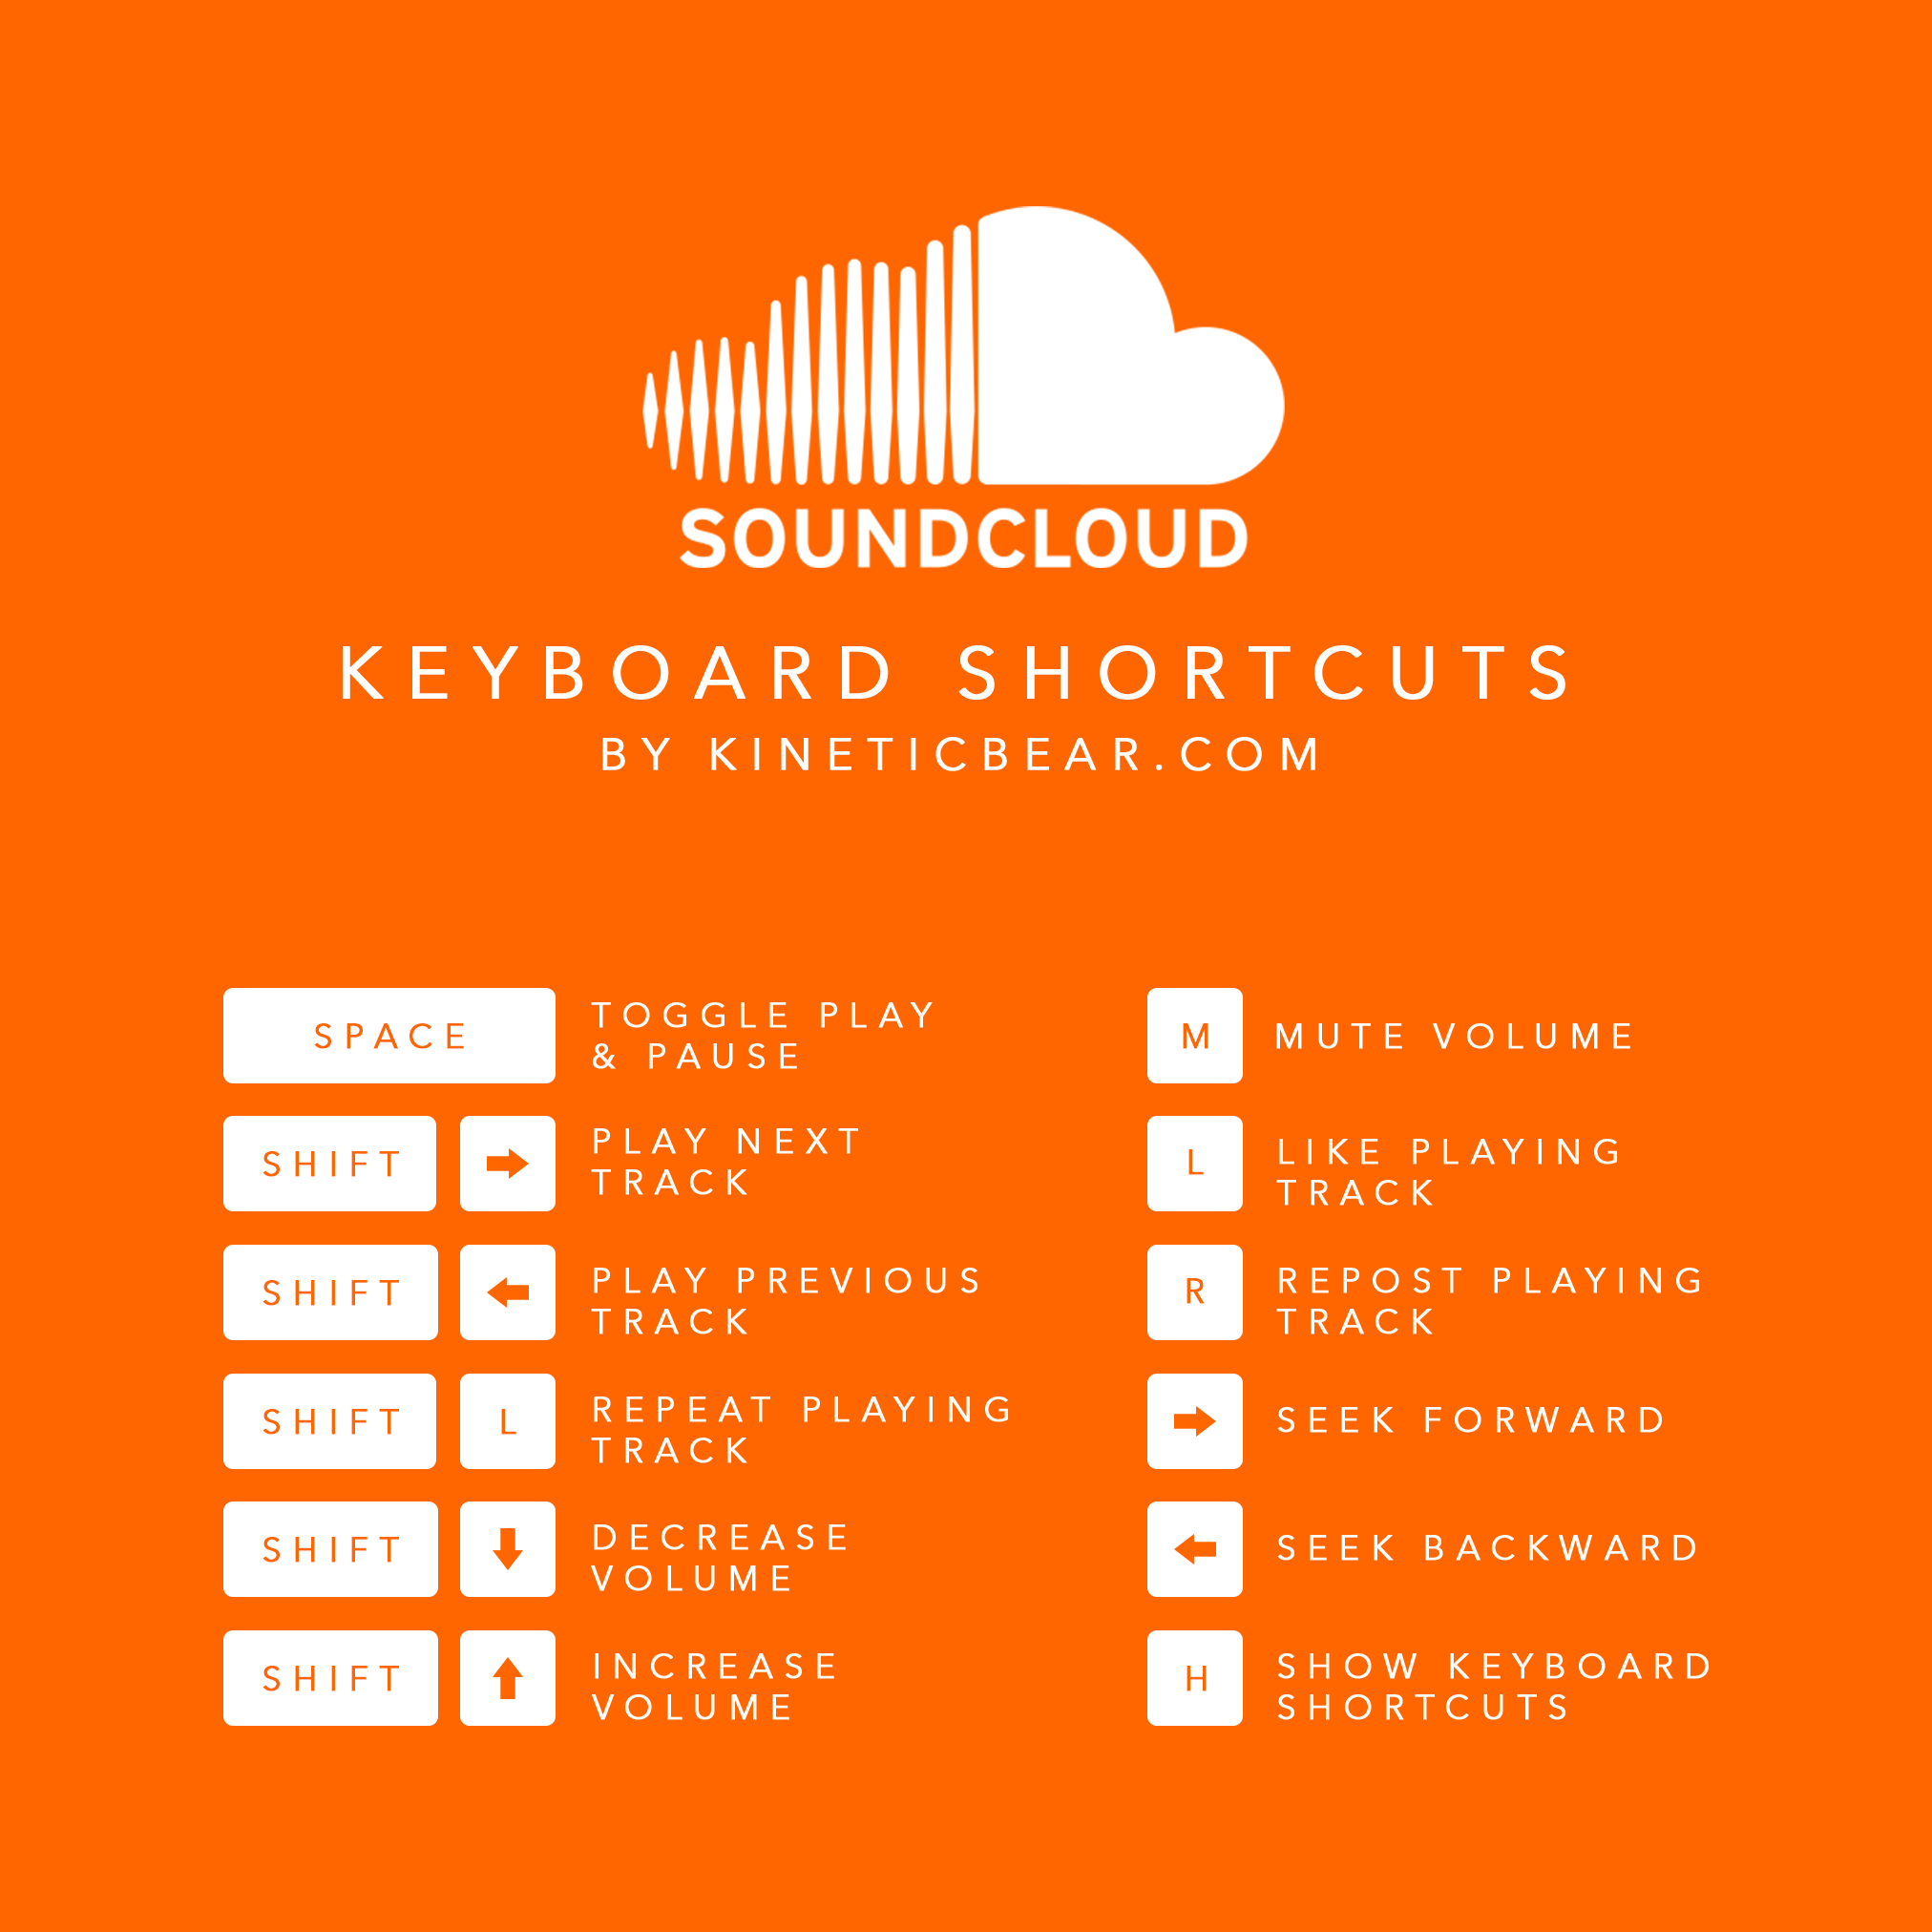 keyboard shortcuts for soundcloud on desktop